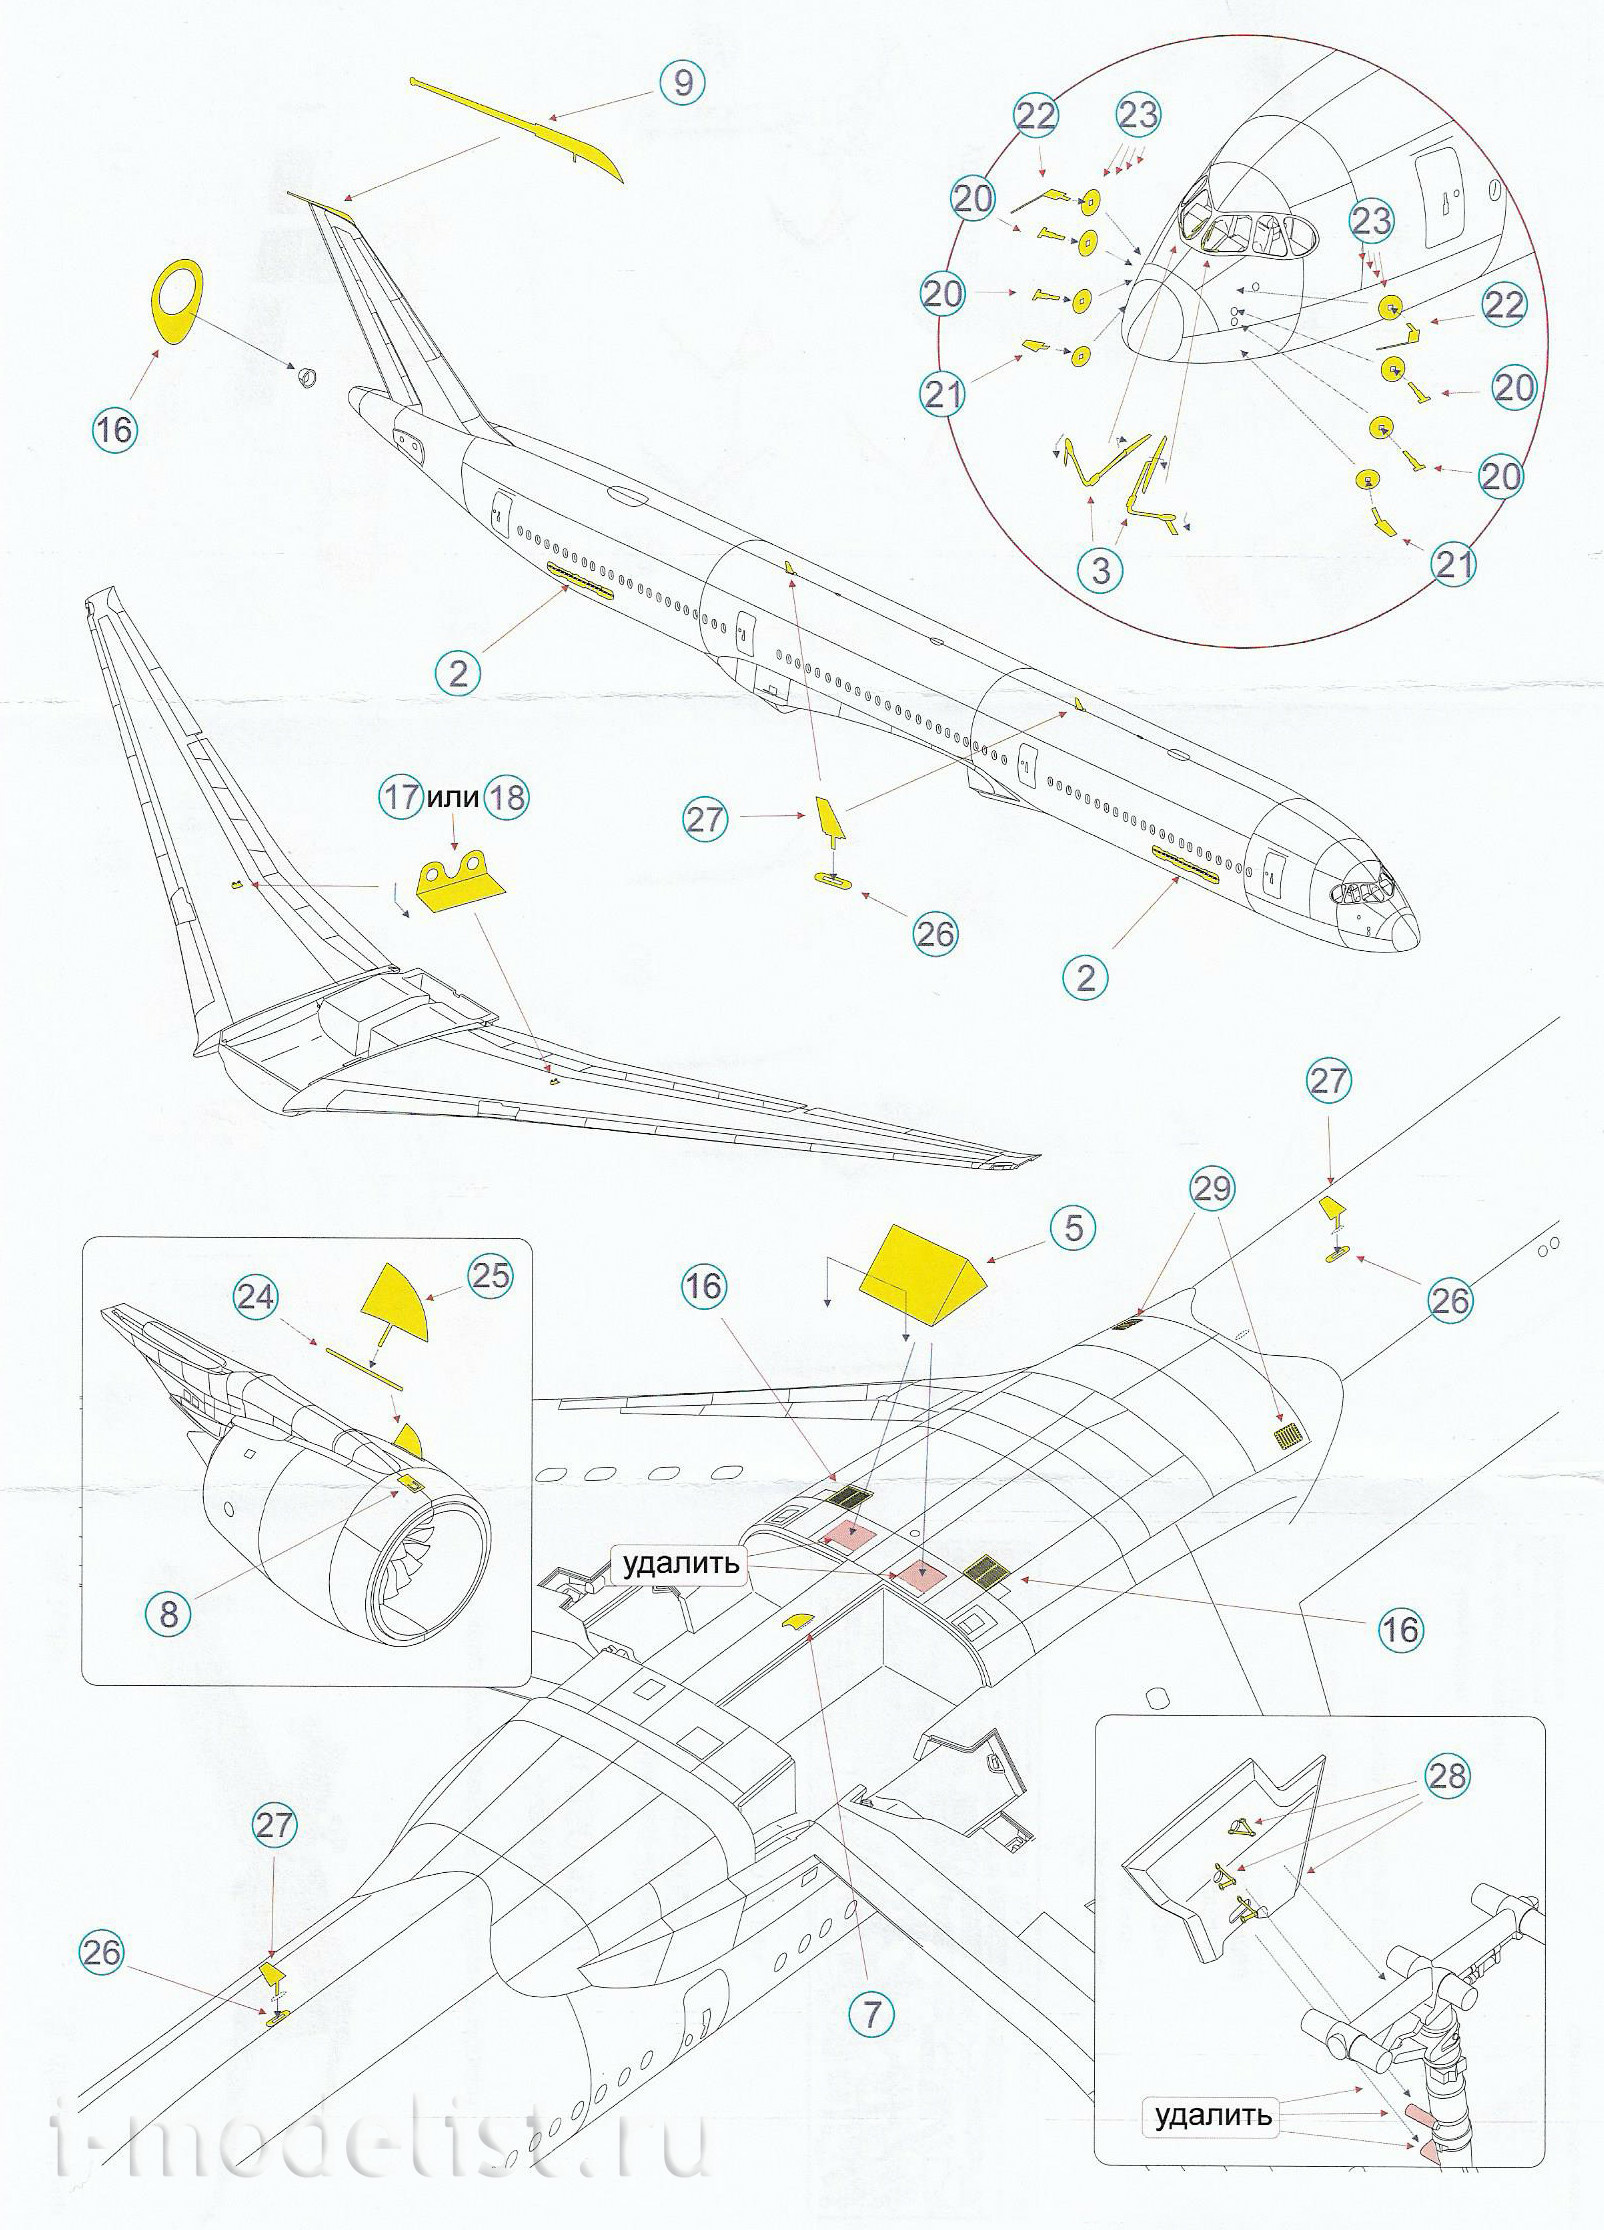 144204 Microdesign 1/144 Airbus A-350-1000 (Zvezda)